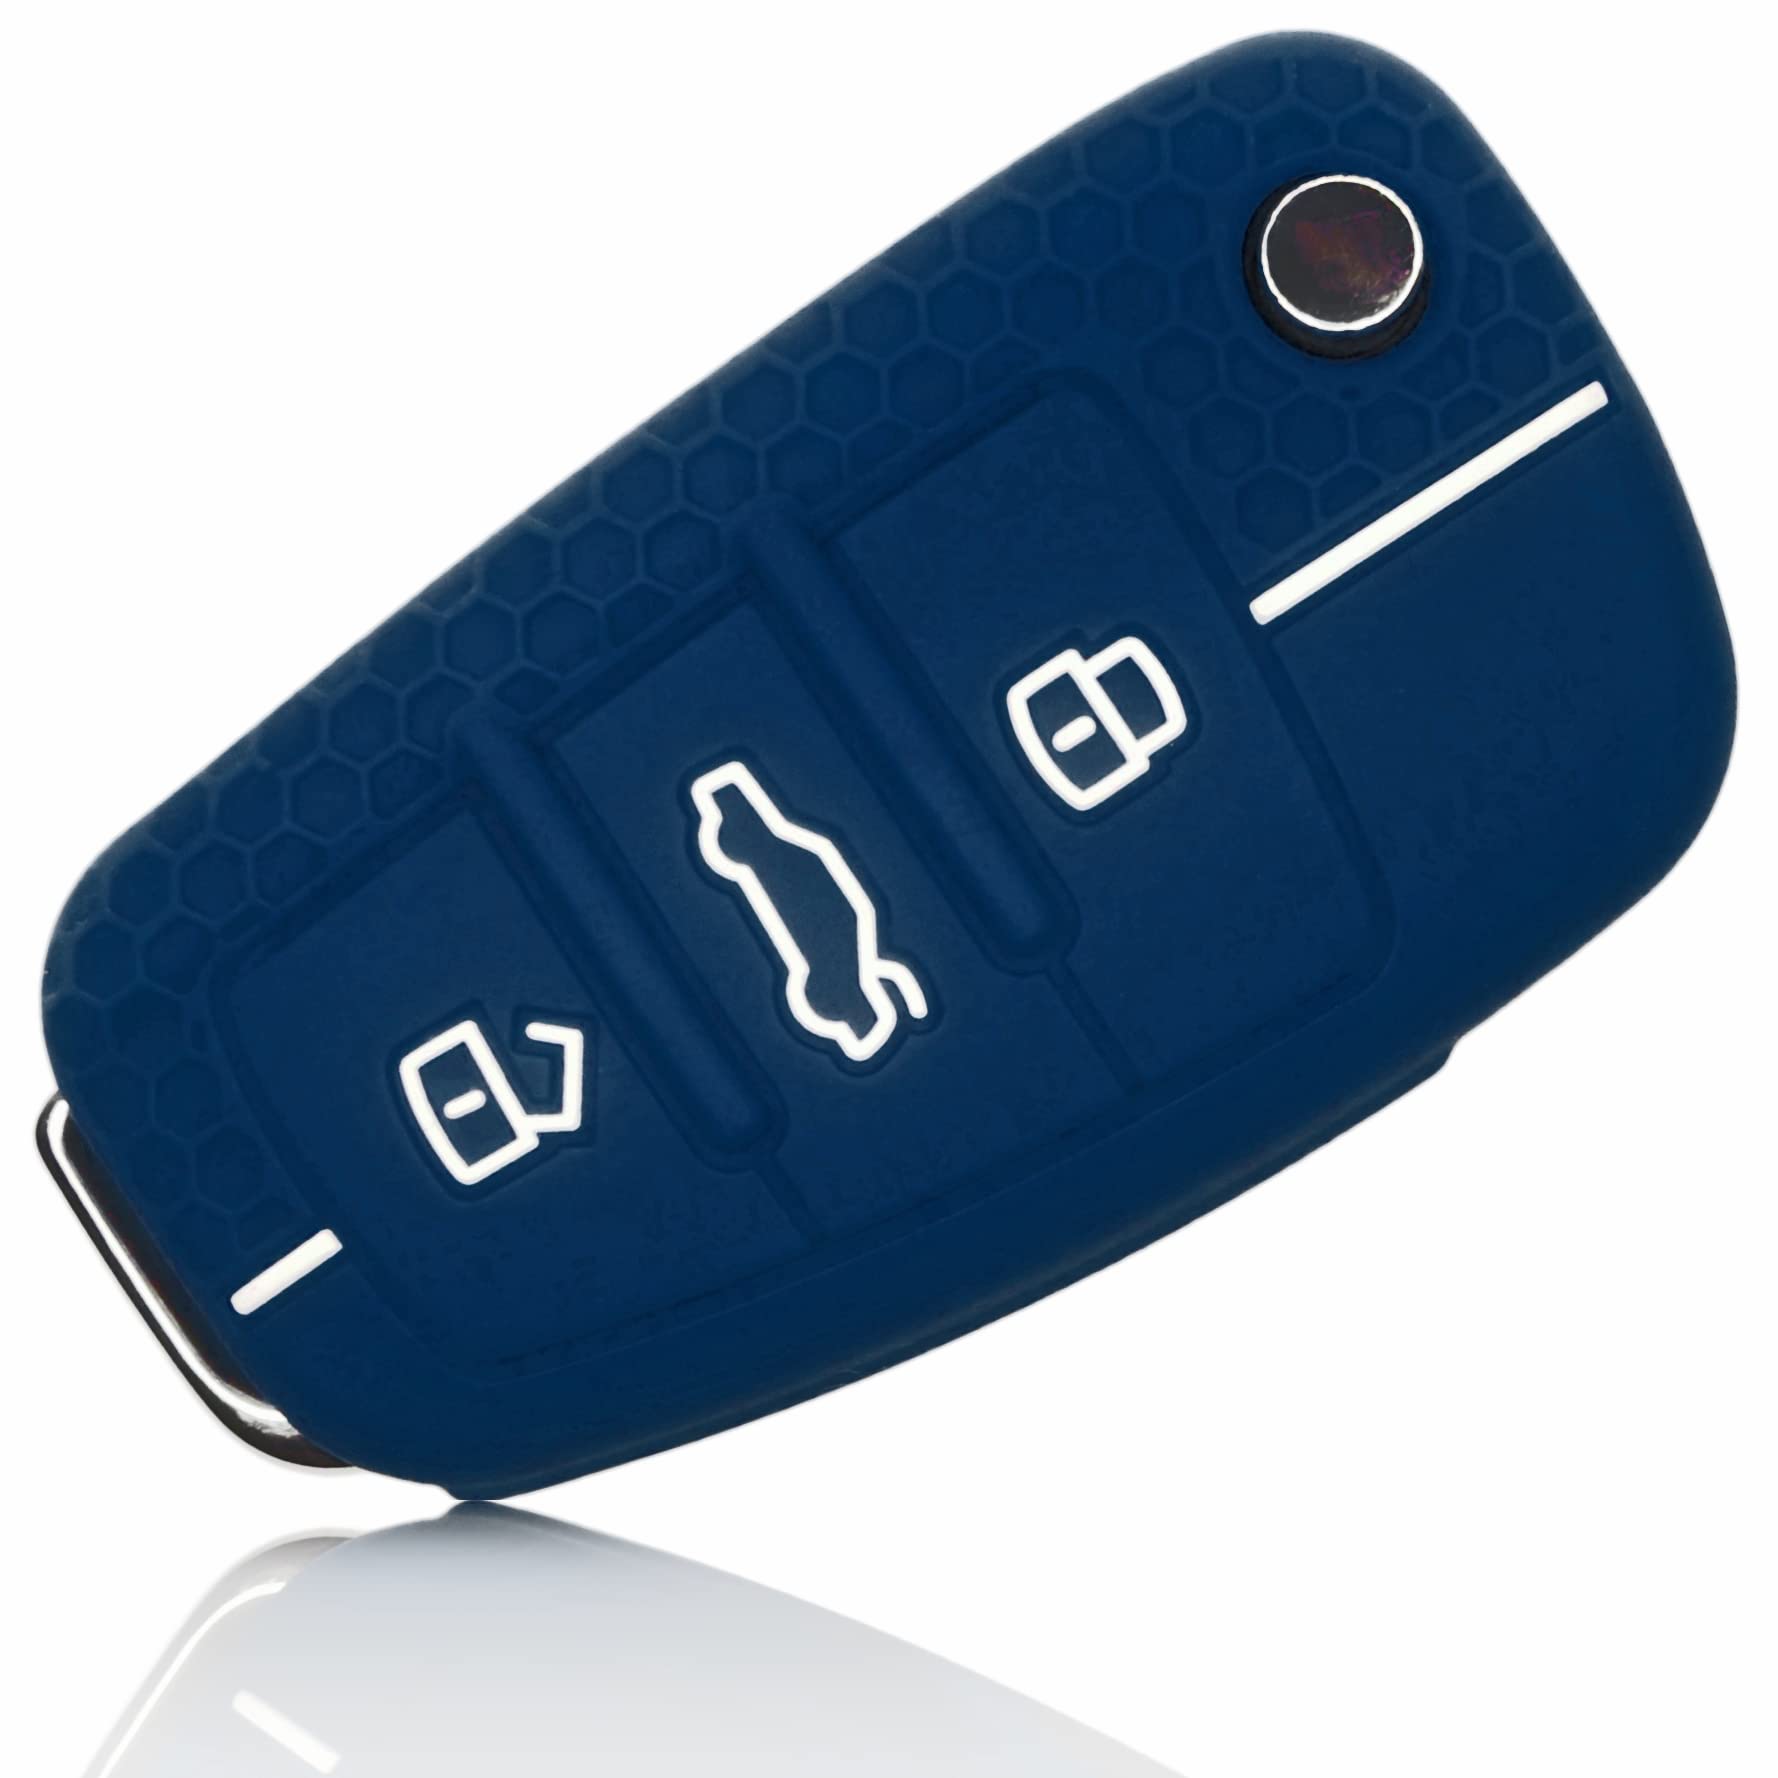 FOAMO Autoschlüssel Hülle kompatibel mit Audi 3-Tasten Klappschlüssel - Silikon Schutzhülle Cover Schlüssel-Hülle in Blau-Weiß von FOAMO